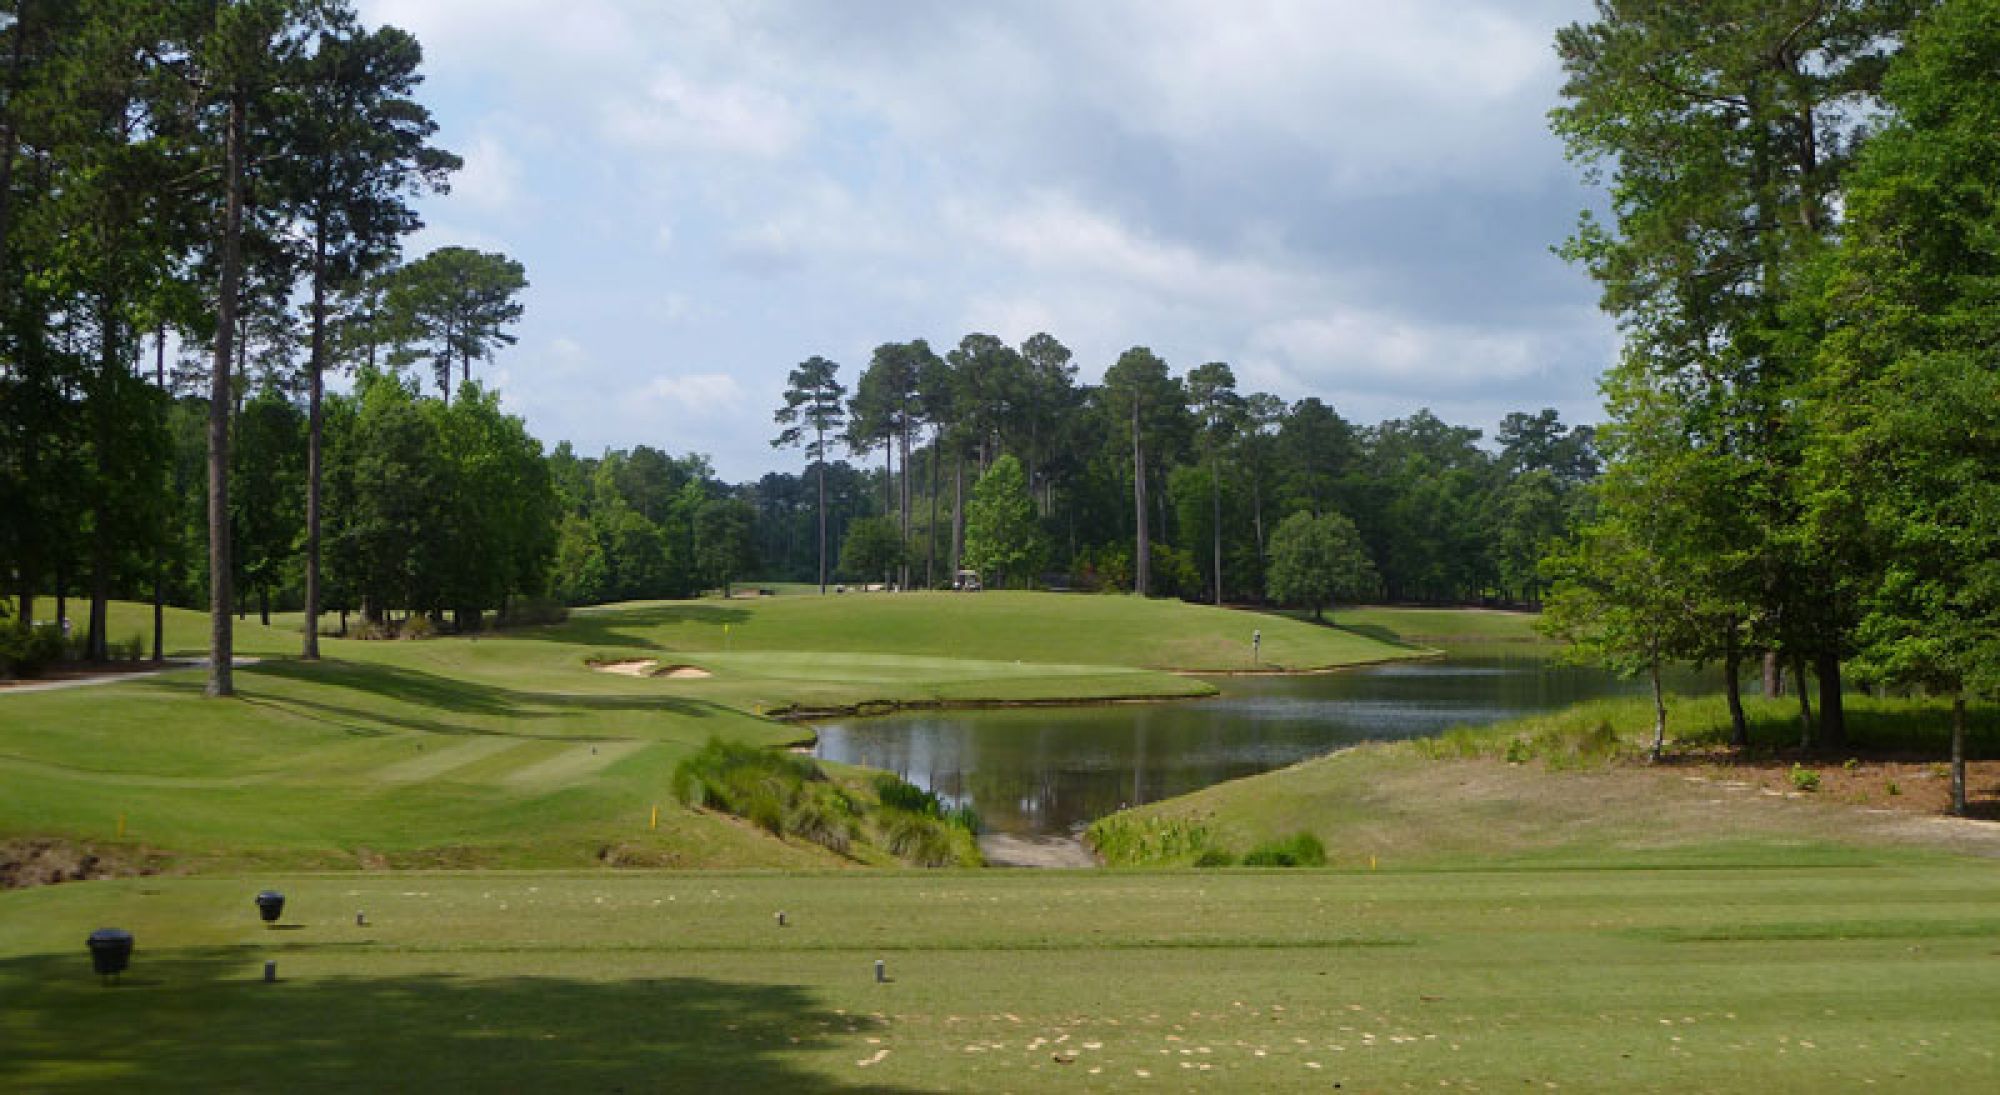 All The TPC Myrtle Beach's scenic golf course in brilliant South Carolina.